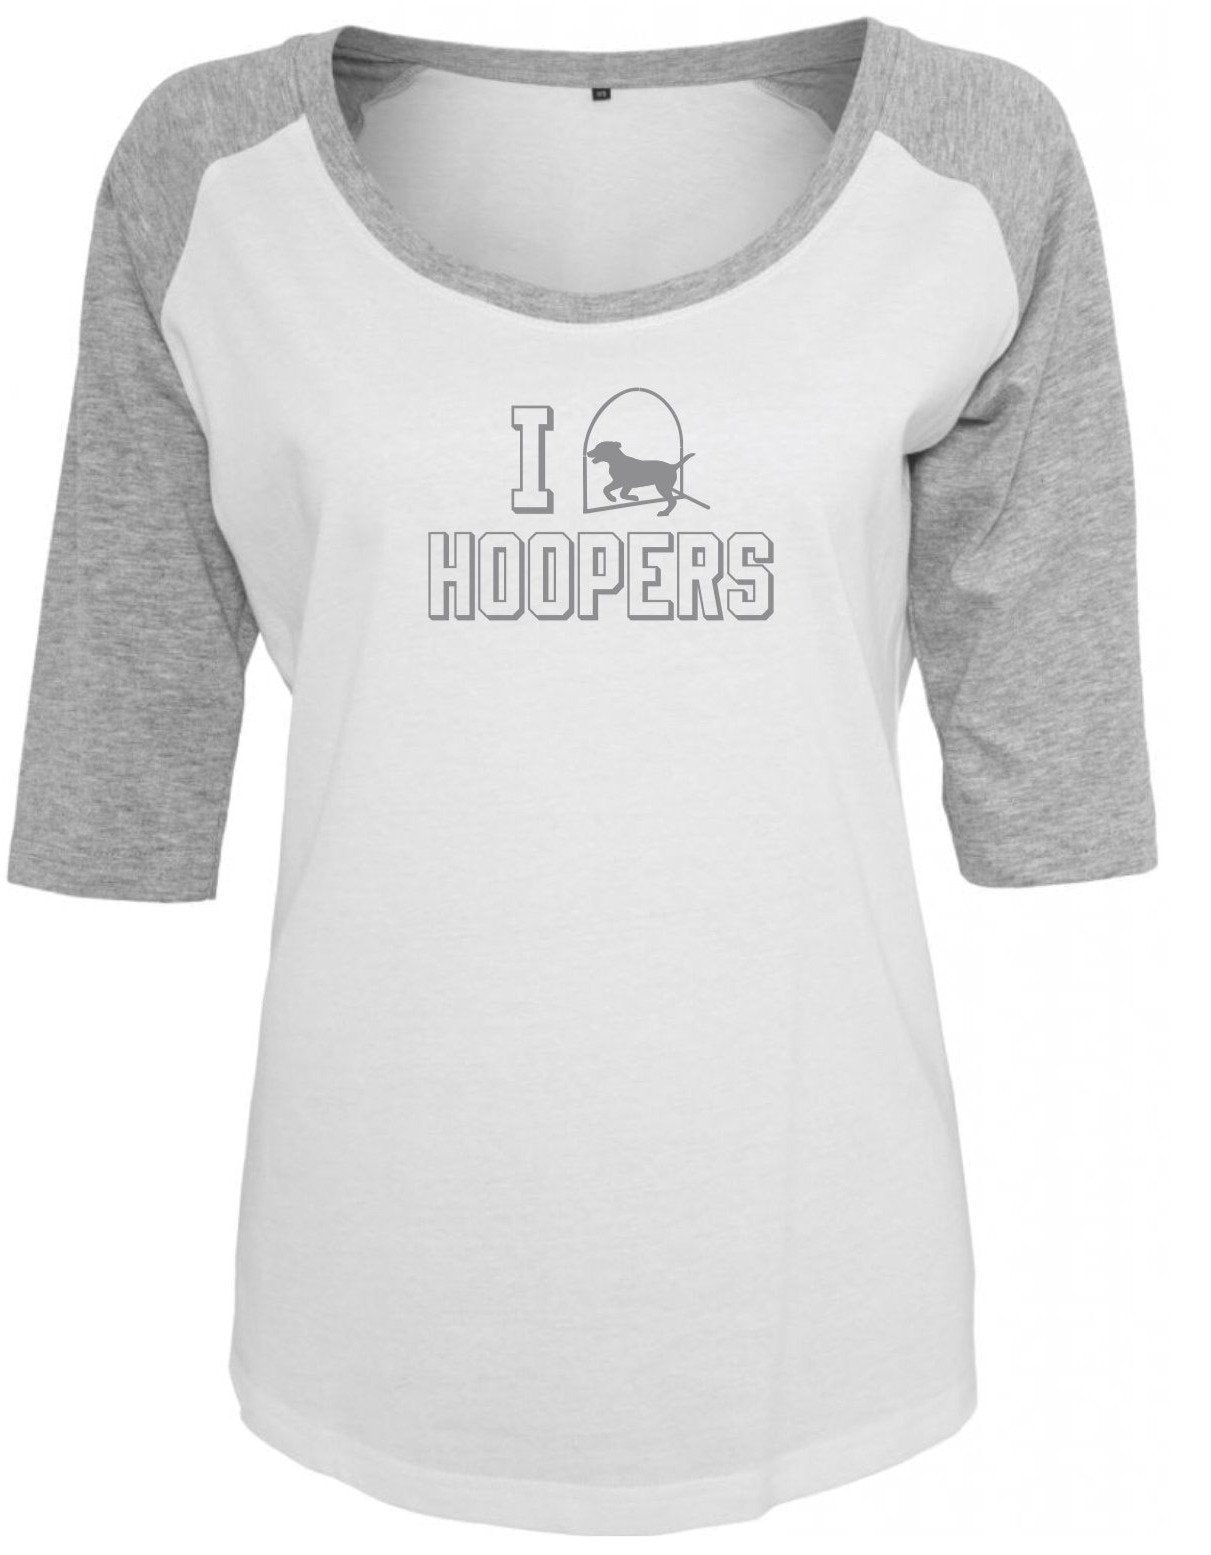 I Love Hoopers ¾ Contrast Women's T-shirt - Pooch-